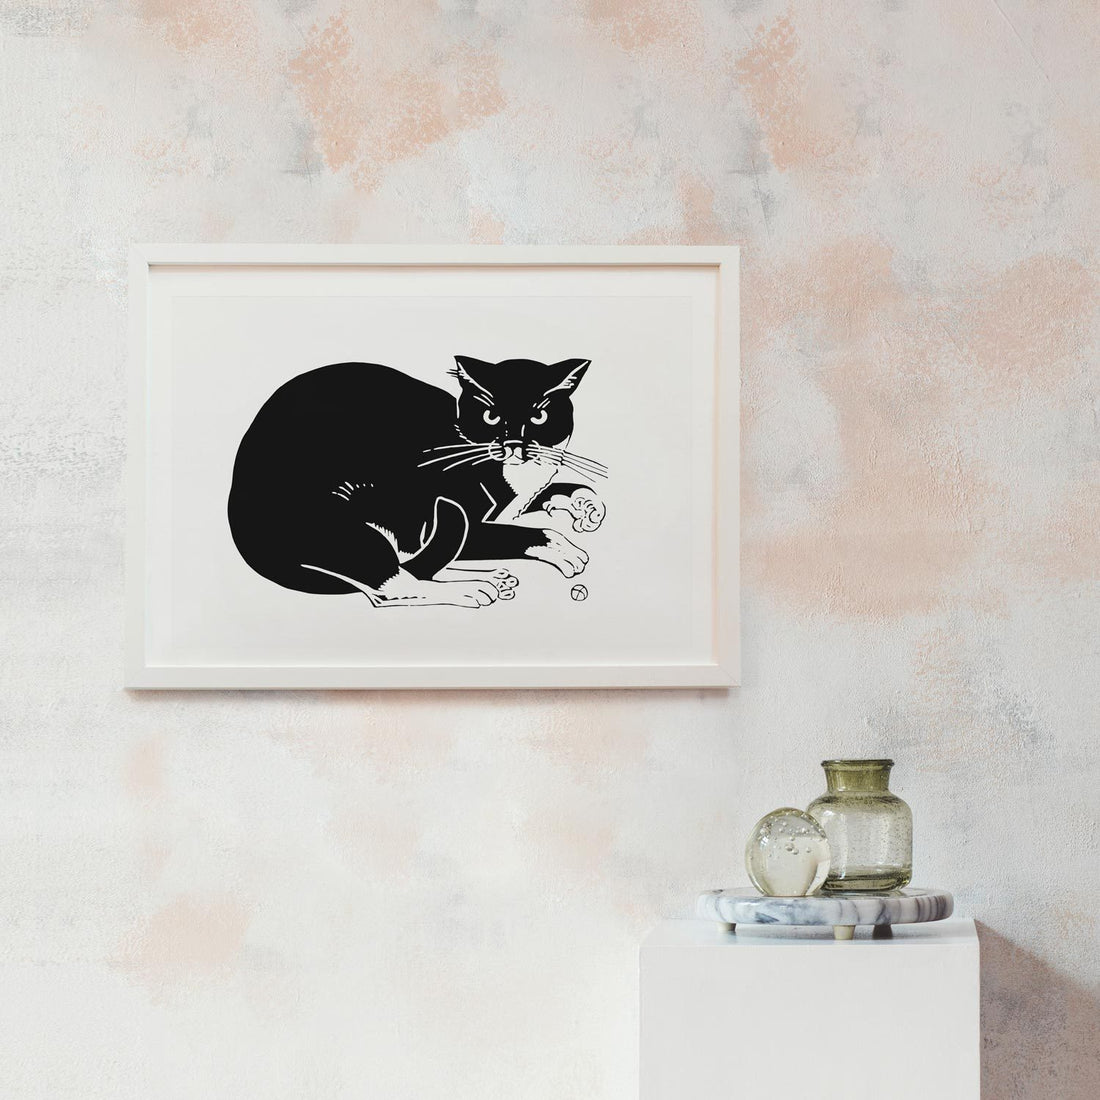 Illustration Print with black cat